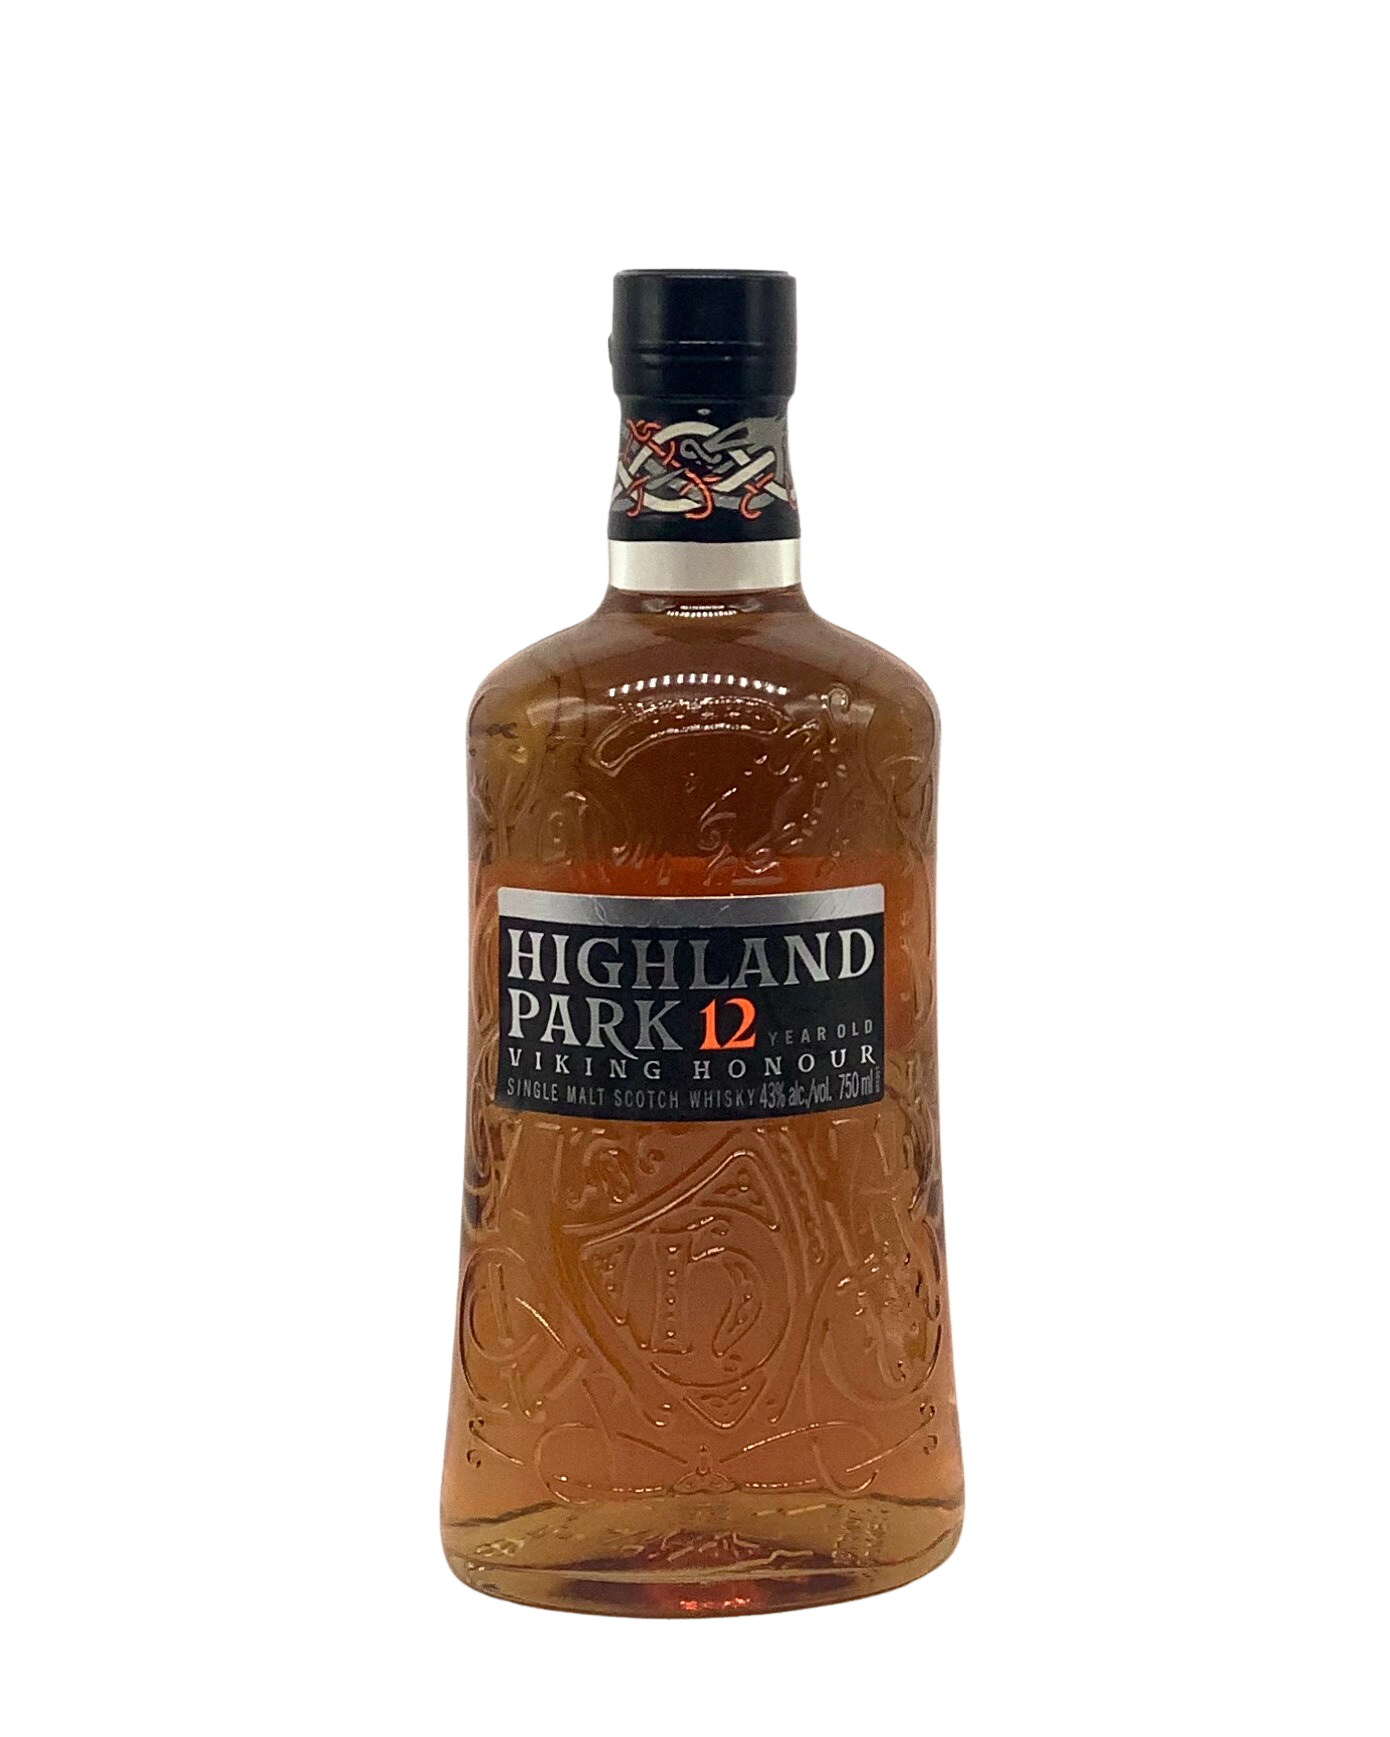 Highland Park 12 YR Viking Honour Single Malt Scotch Whiskey